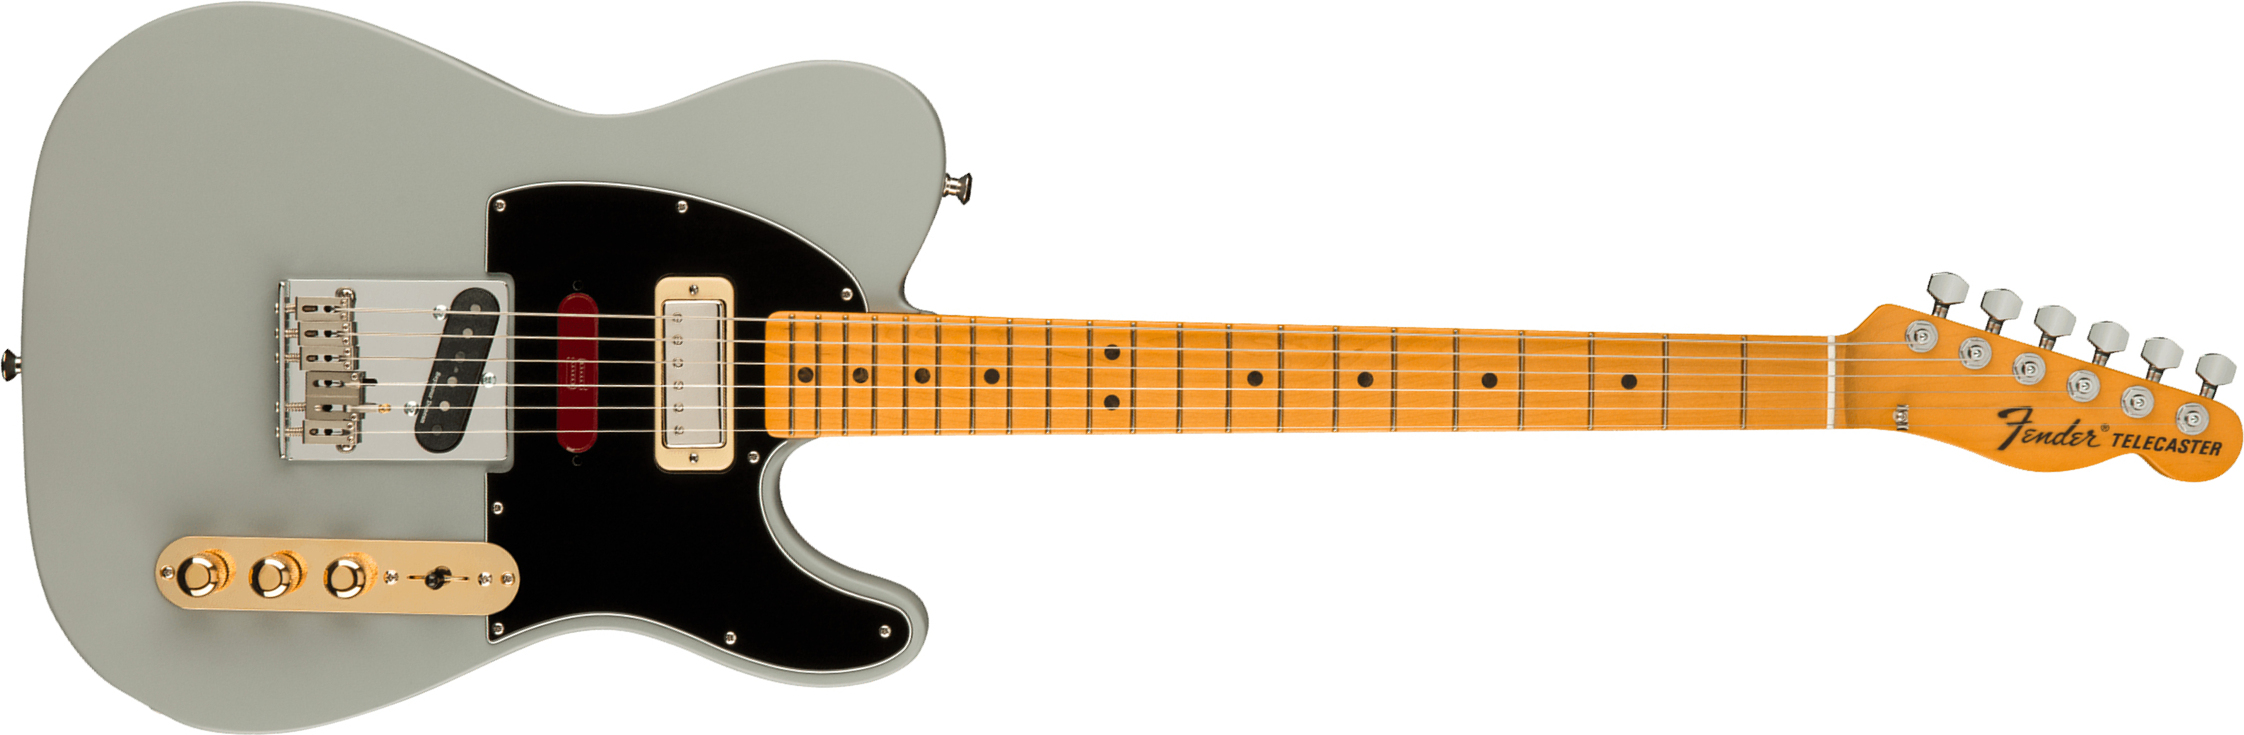 Fender Brent Mason Tele Signature Usa Ssh B-bender Mn - Primer Gray - Guitare Électrique Forme Tel - Main picture